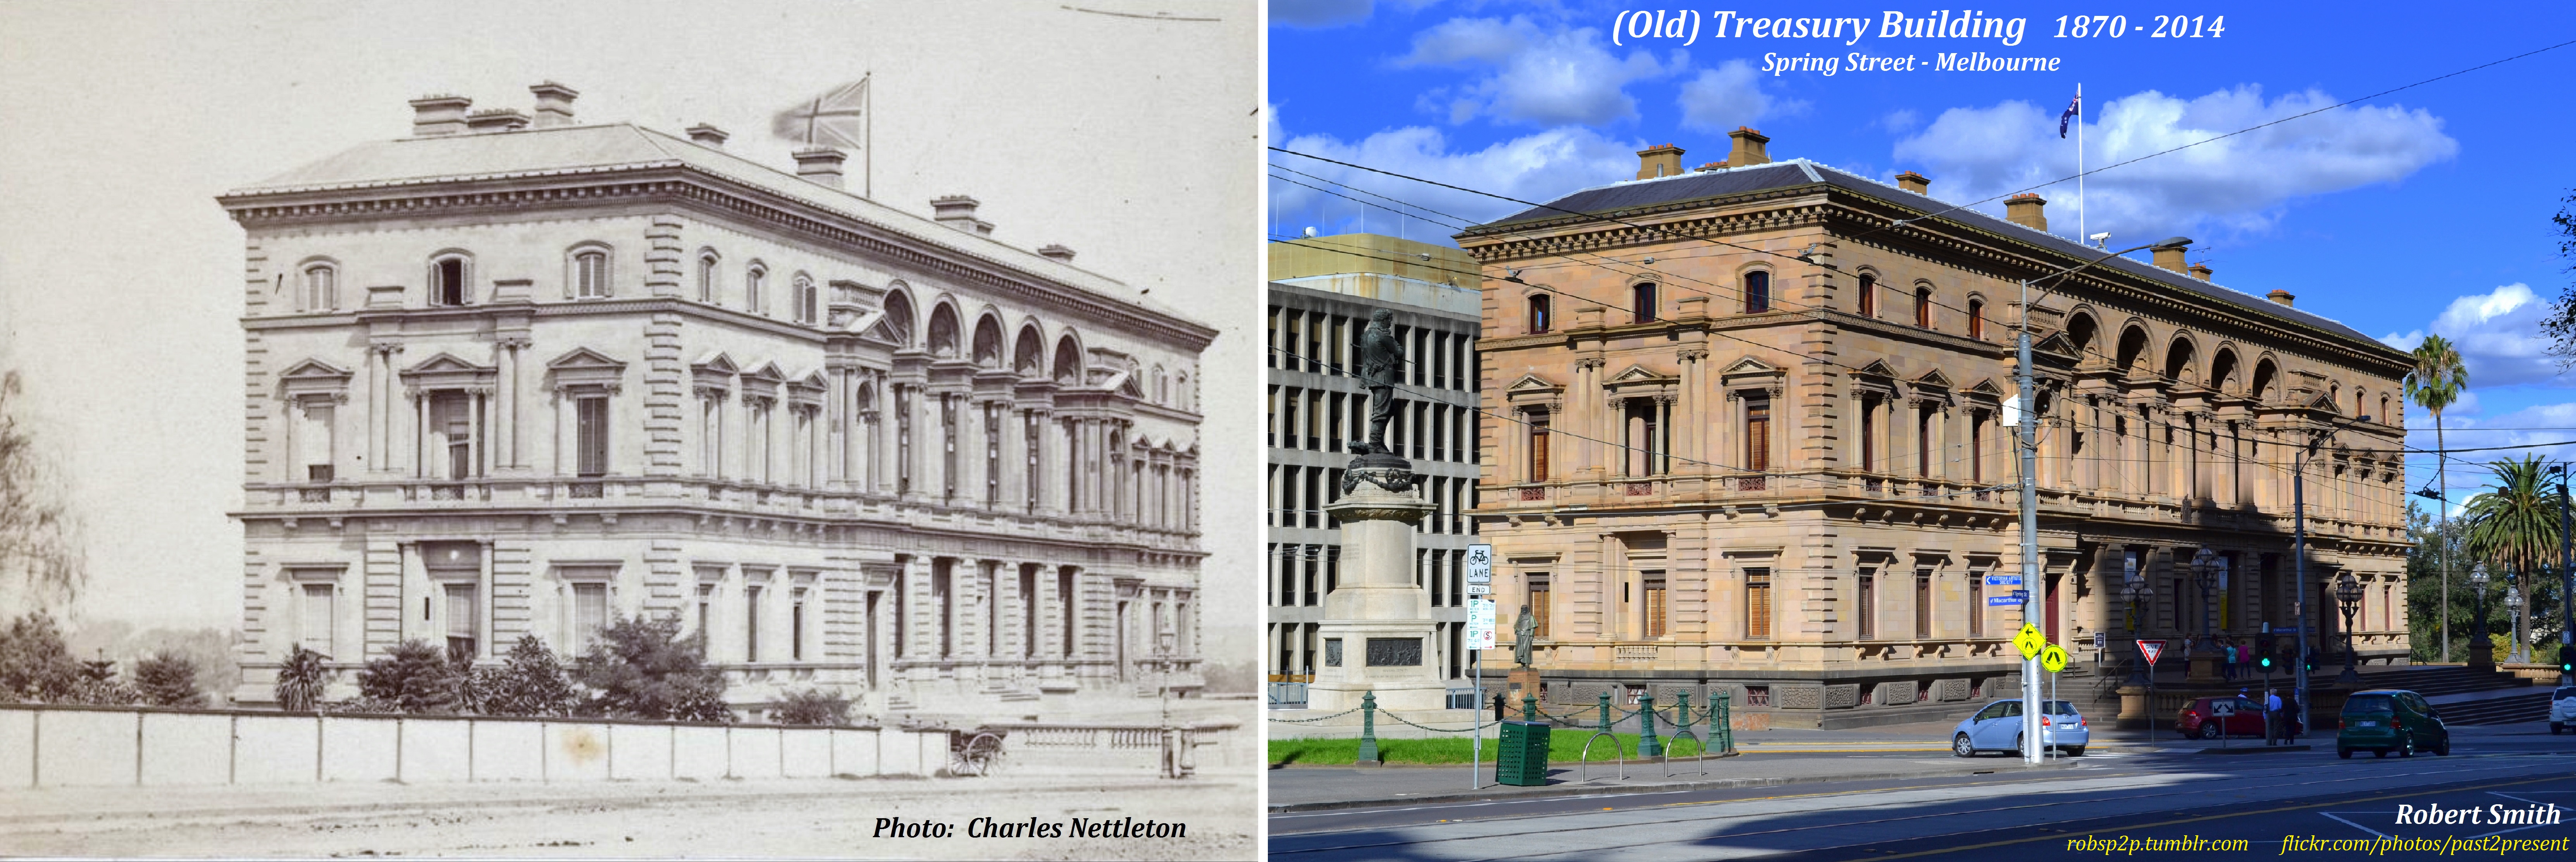 (Old) Treasury Building:  Spring Street - Melbourne 1870 - 2014